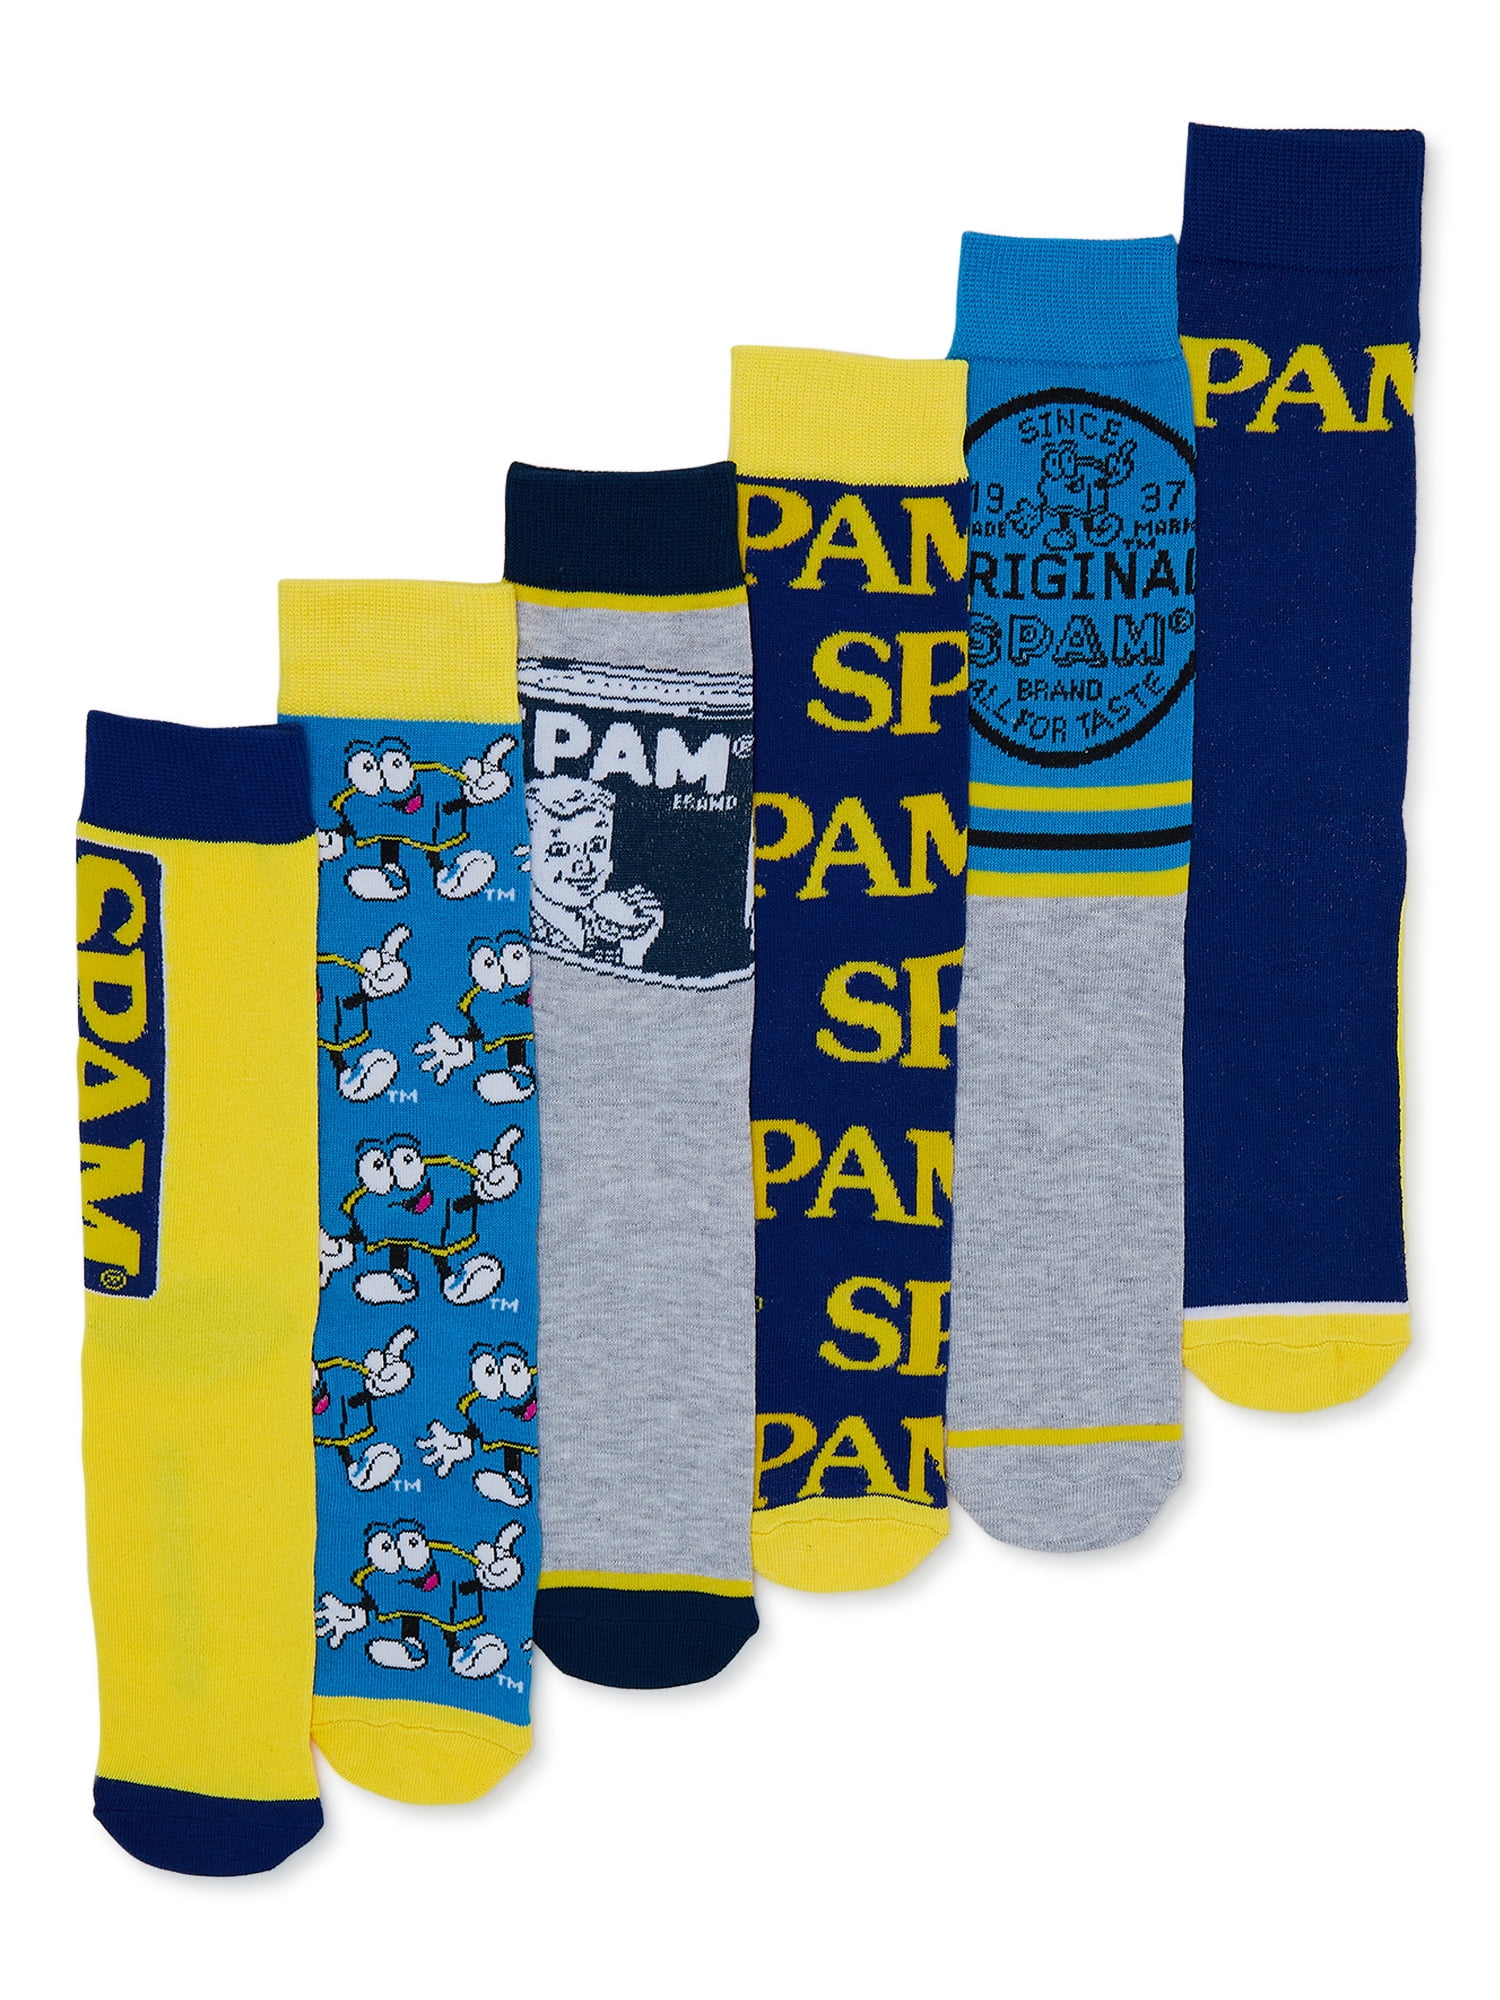 Spam Men's Crew Socks, 6-Pack - Walmart.com